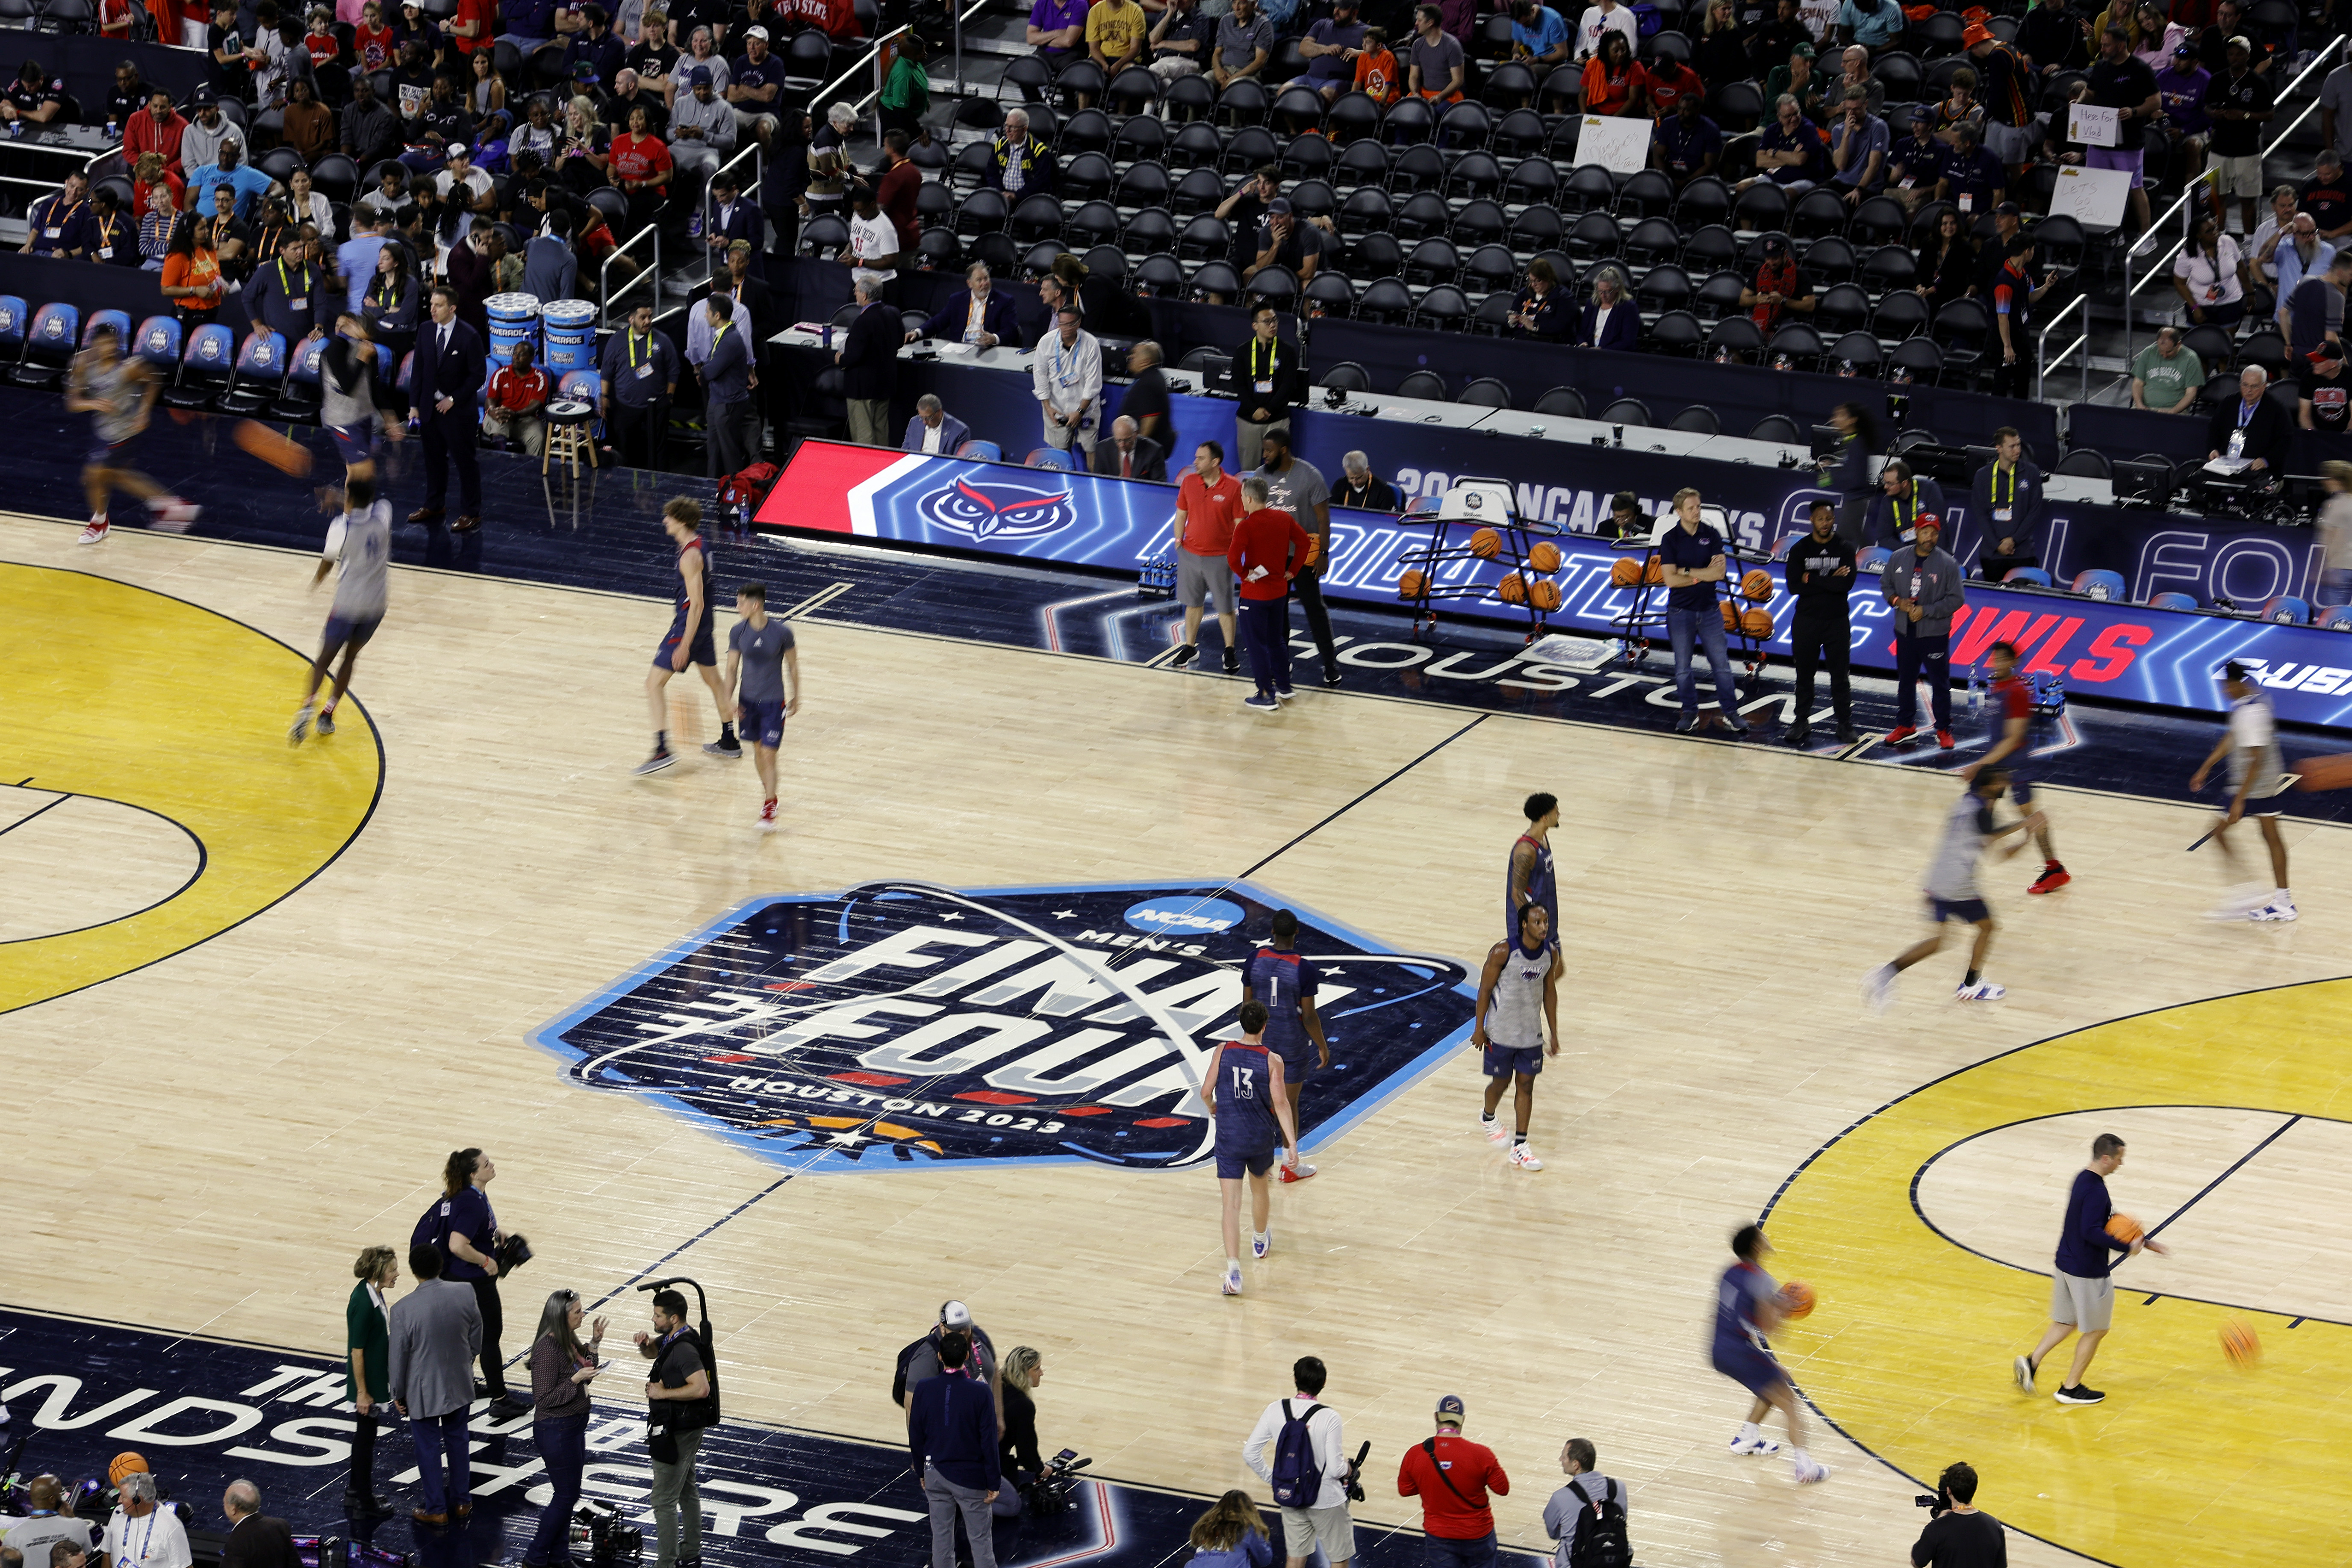 NCAA Men’s Basketball Tournament - Final Four - Practice